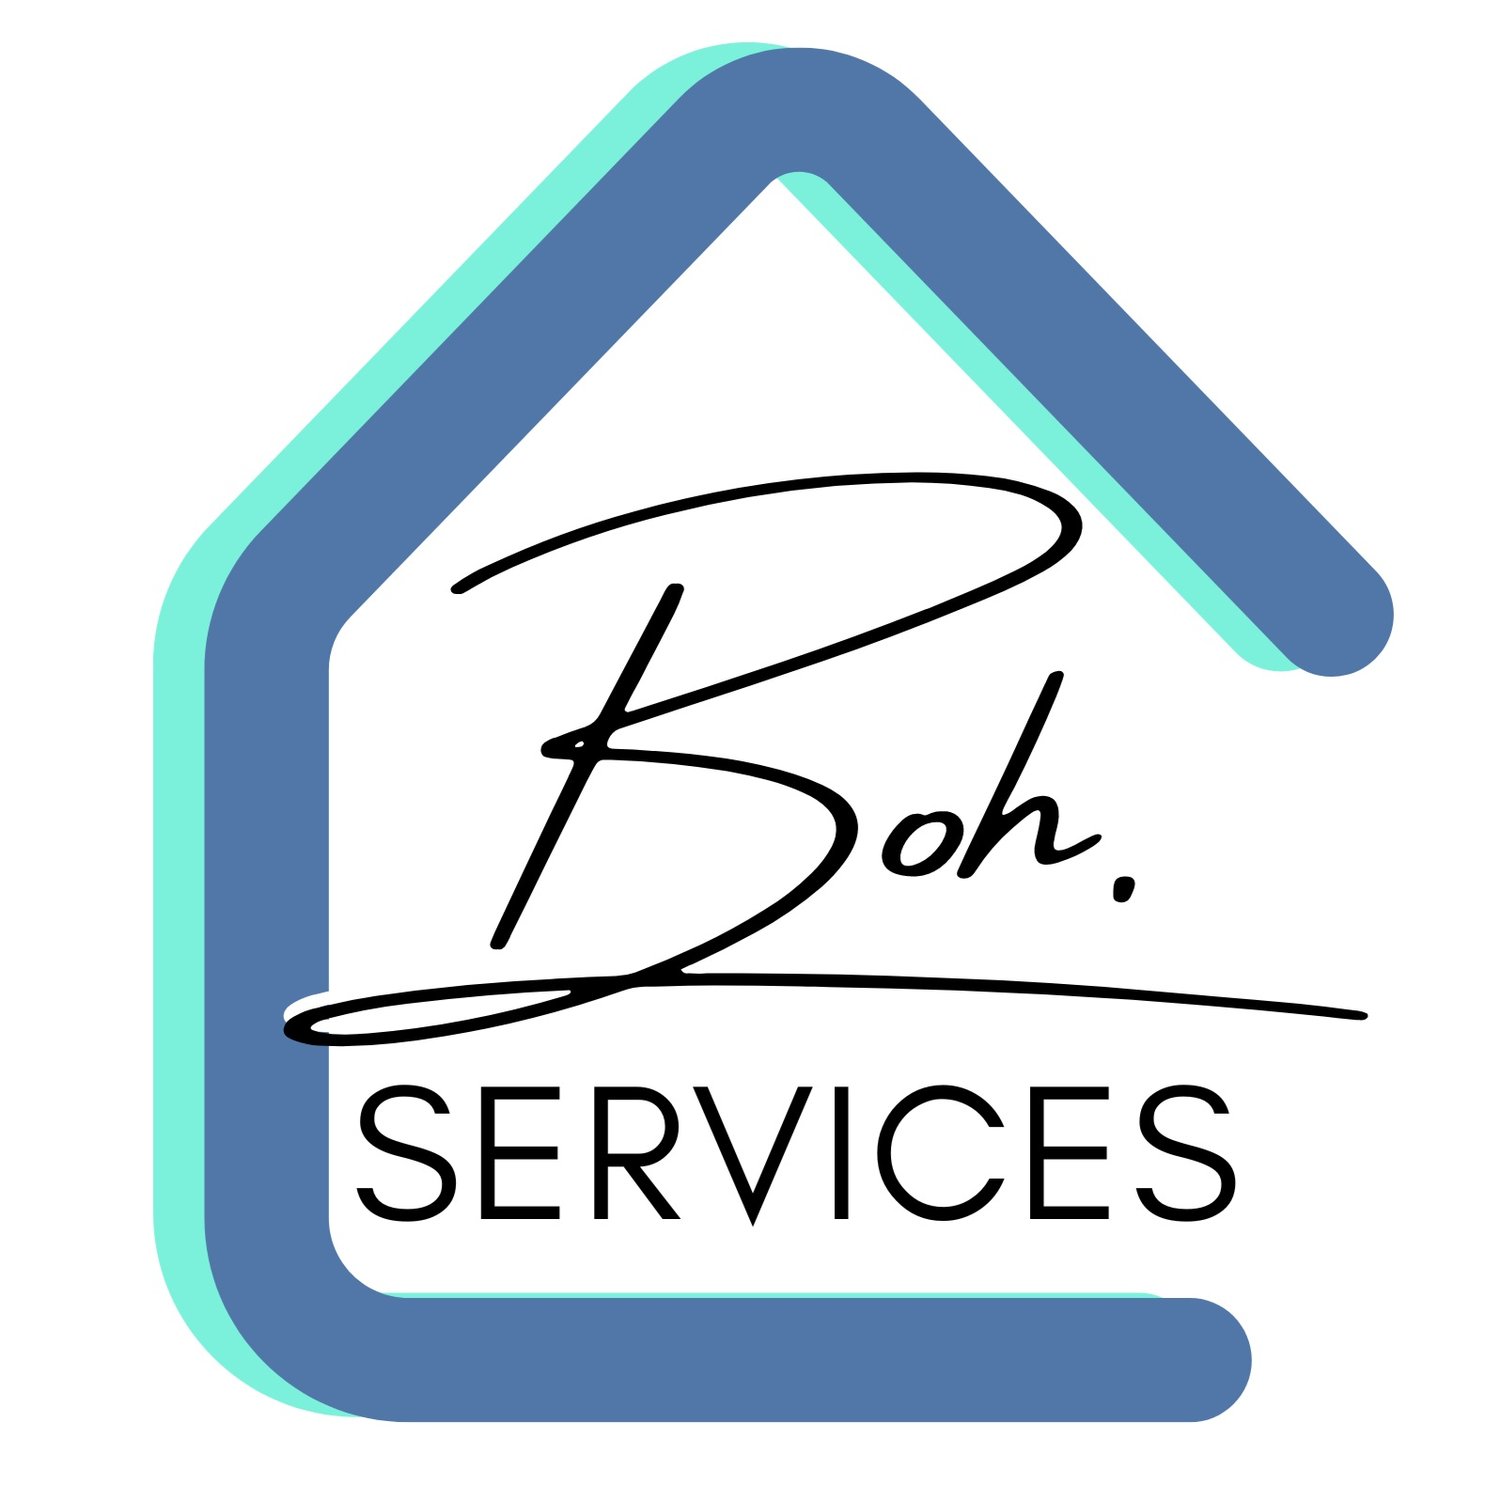 Boh Services